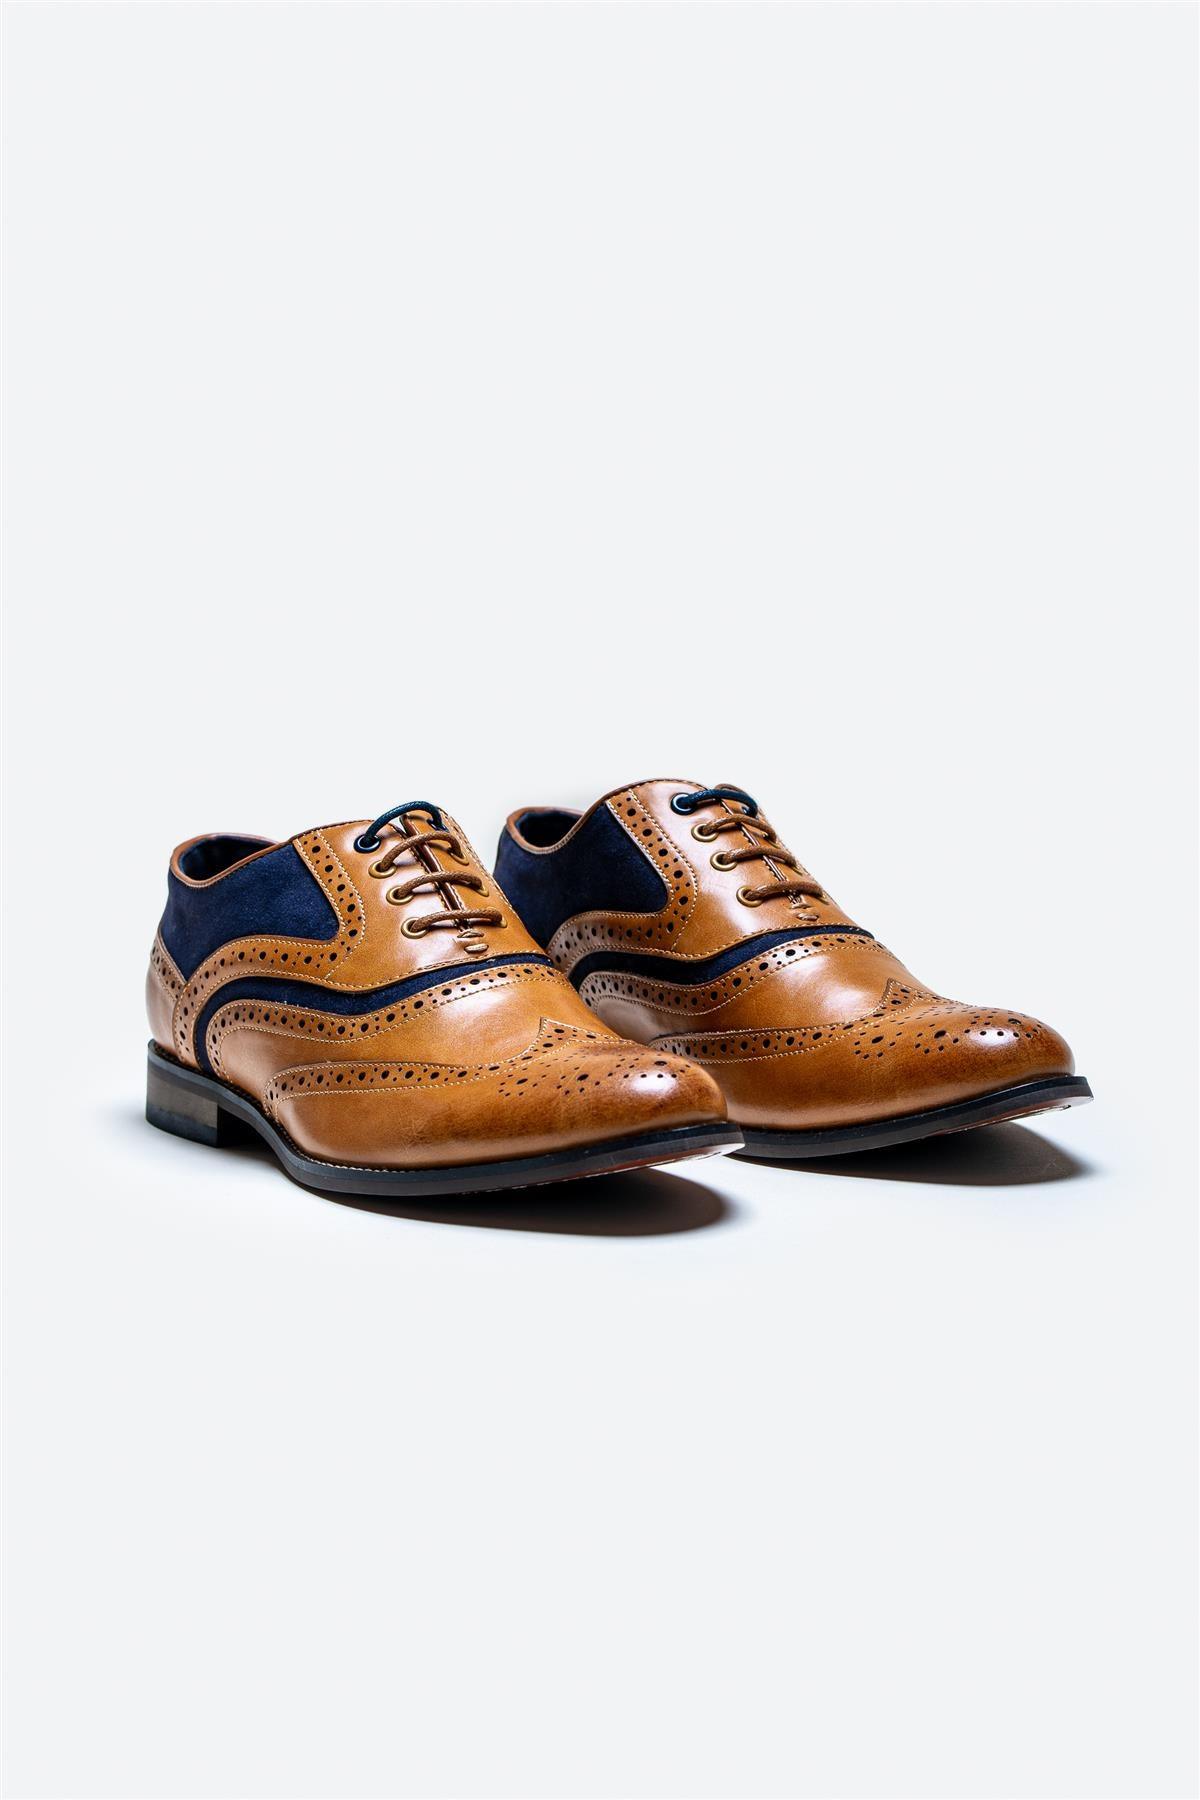 Russel tan/navy shoe front